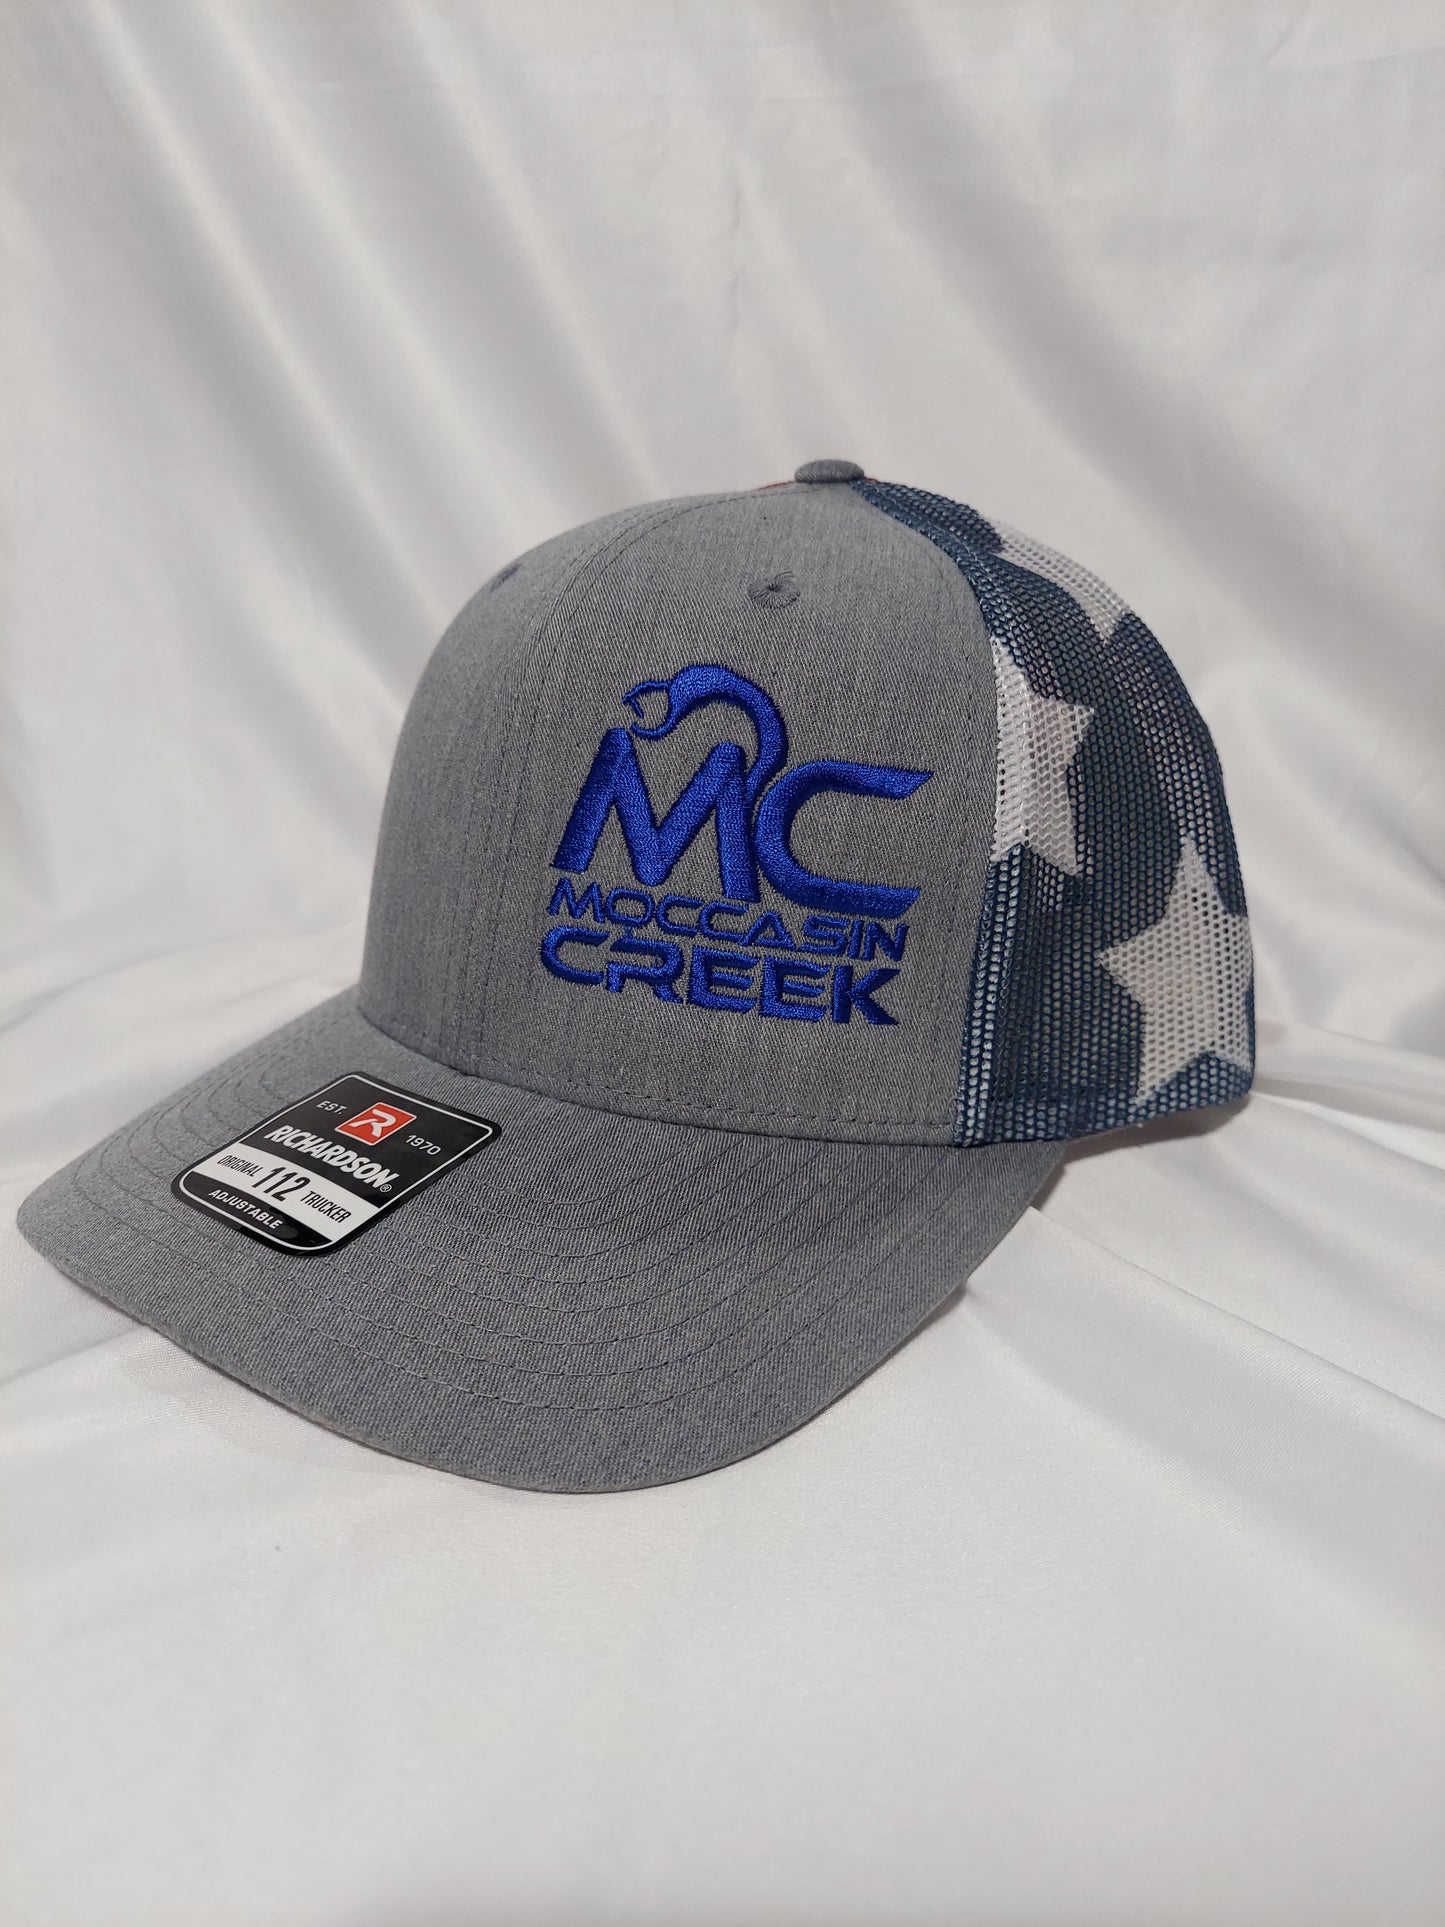 Moccasin Creek Caps